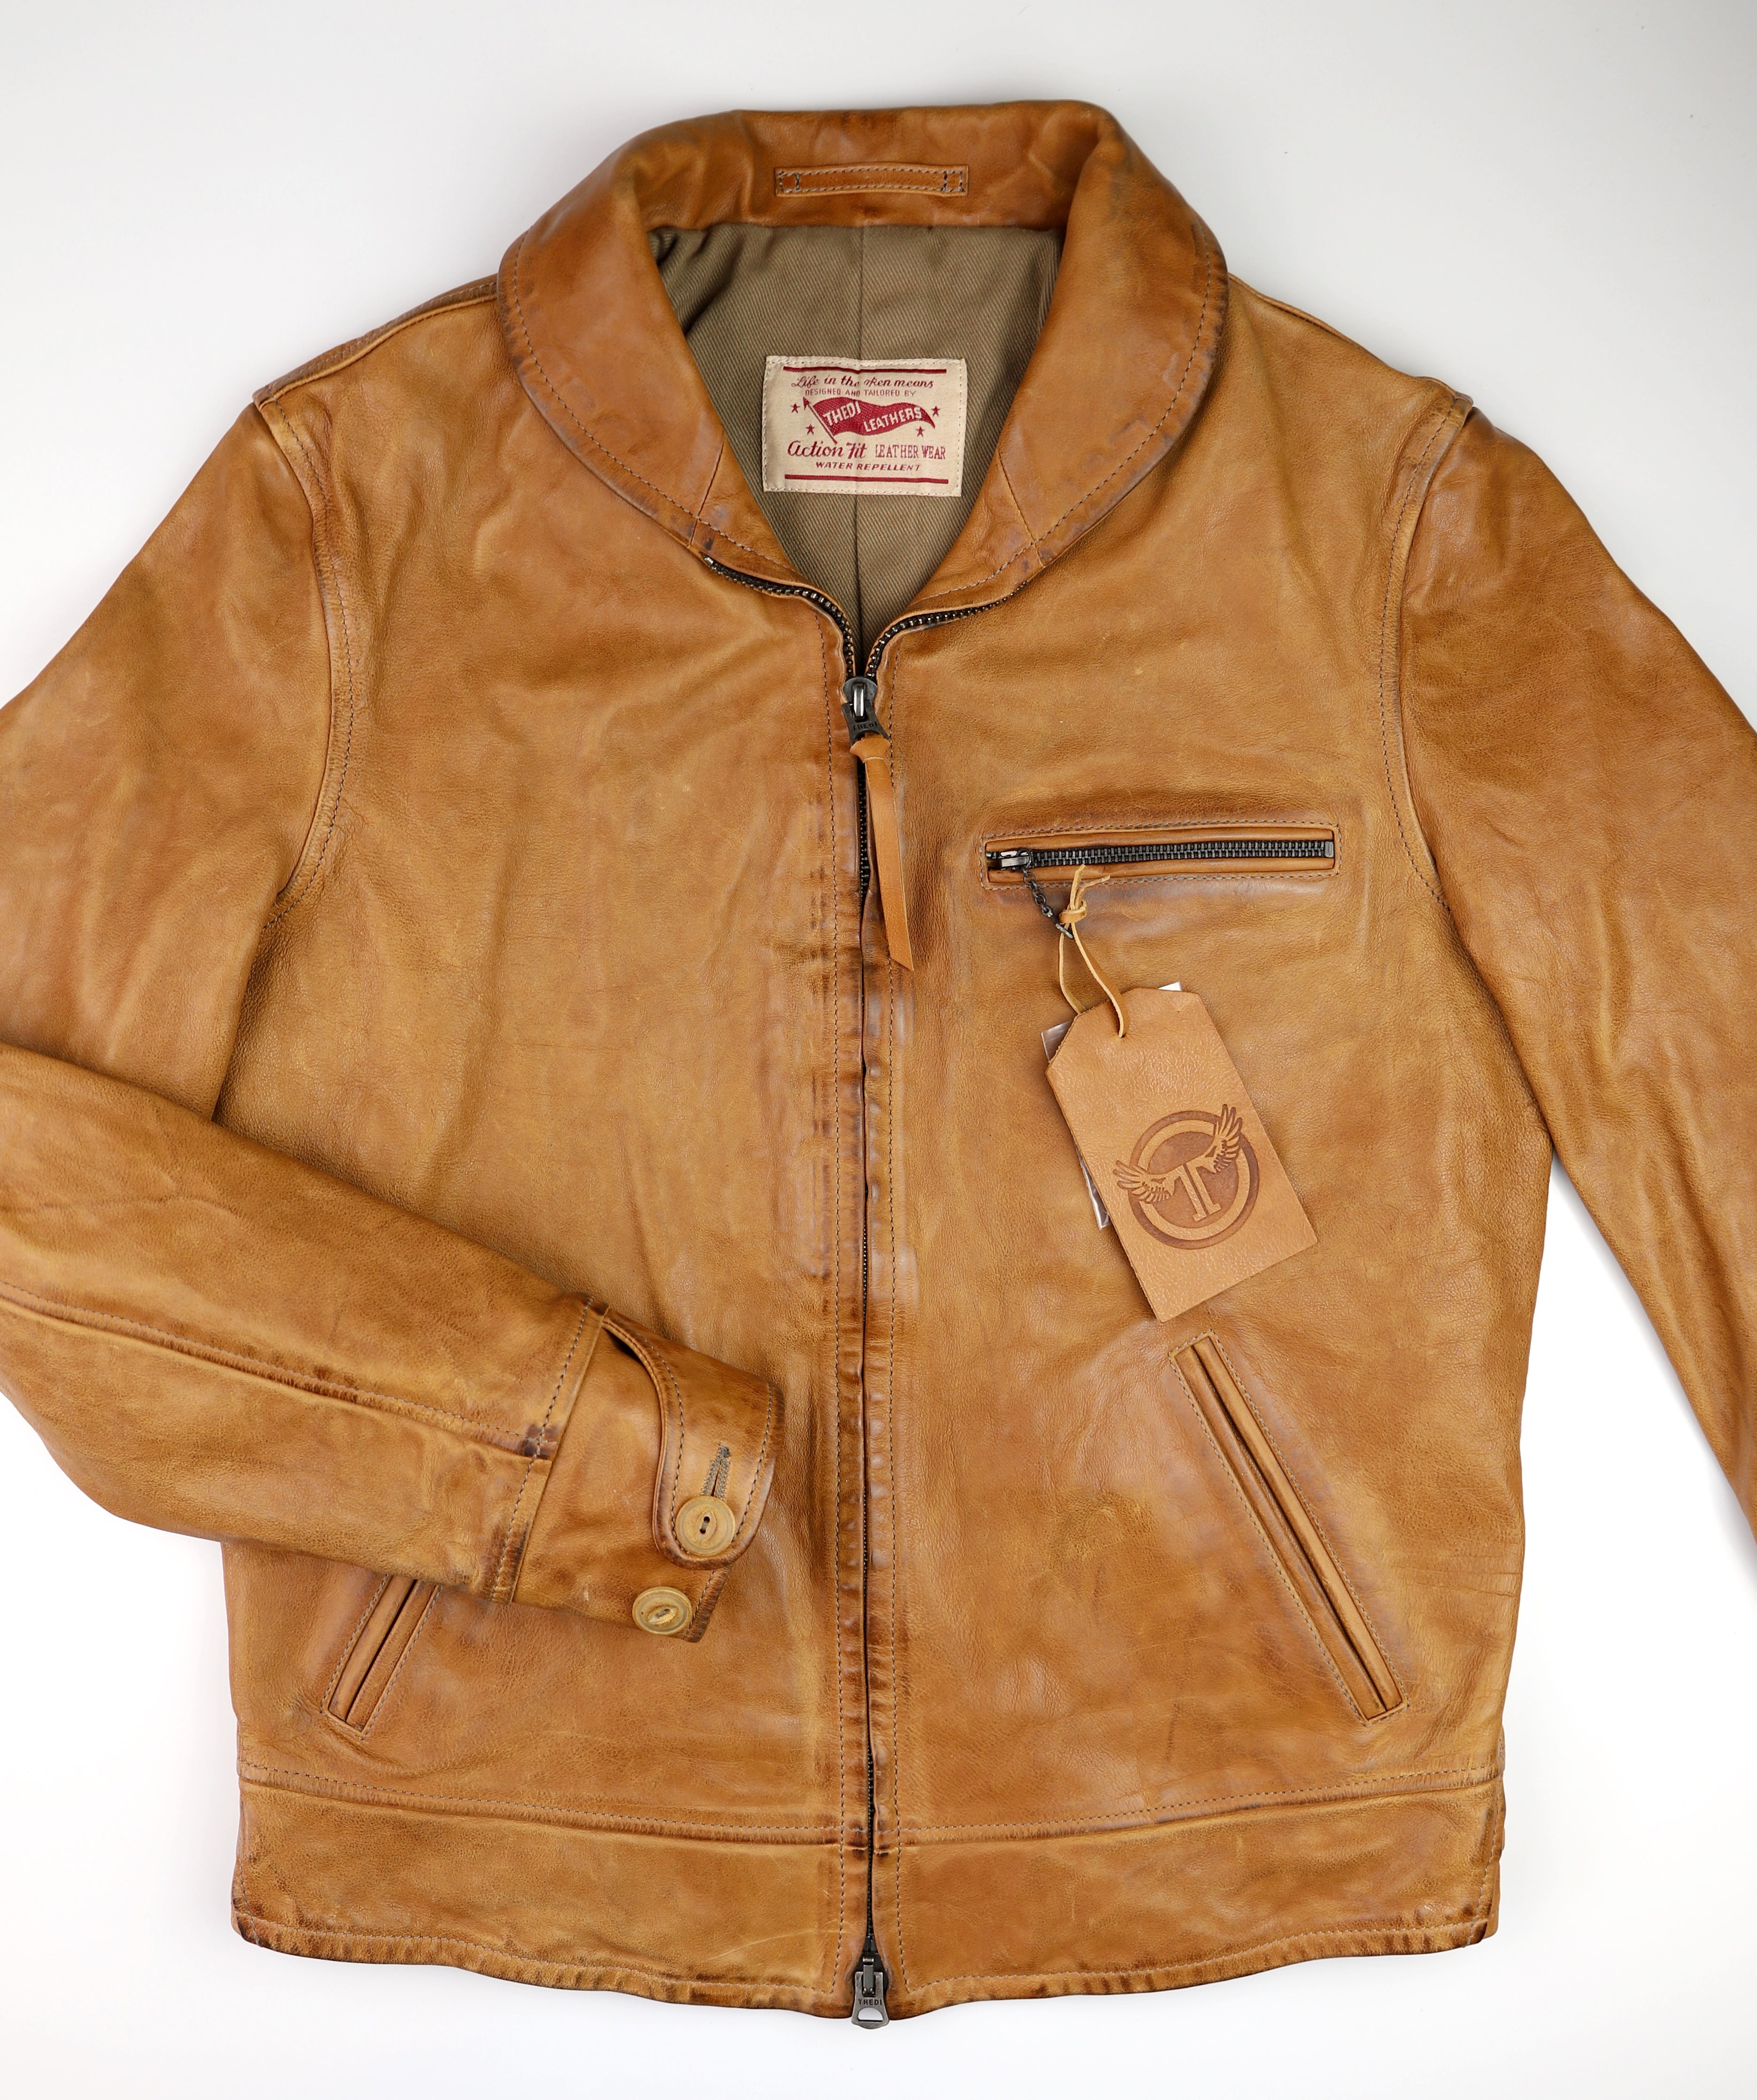 Thedi Markos Zip-Up Shawl Collar Jacket, size Small, Cuoio Buffalo